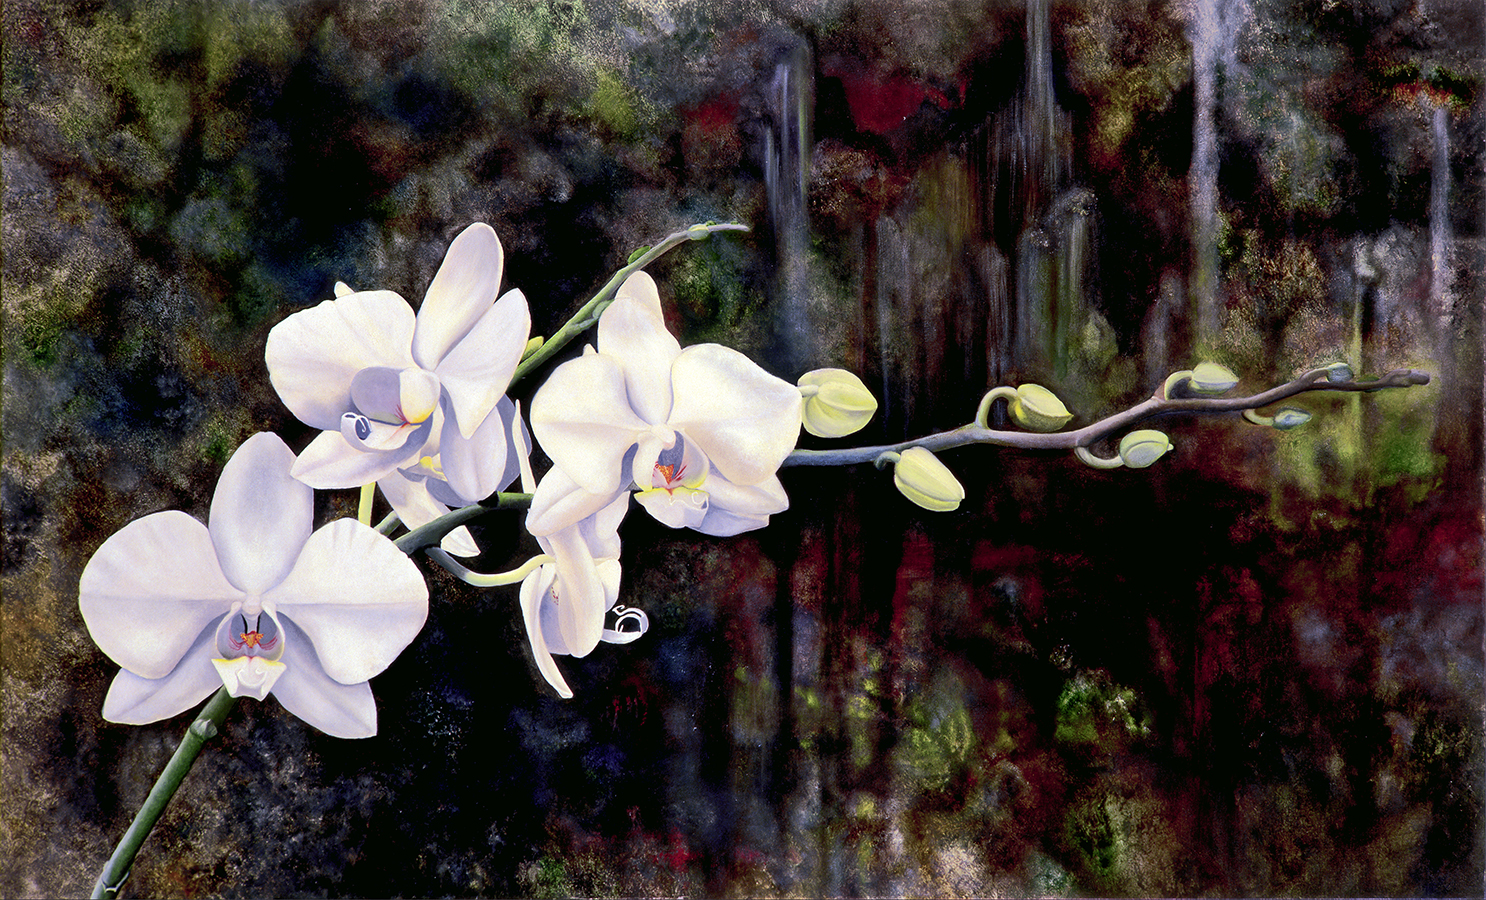 "Orchids" an original oil painting by Matthew Holoden Bates